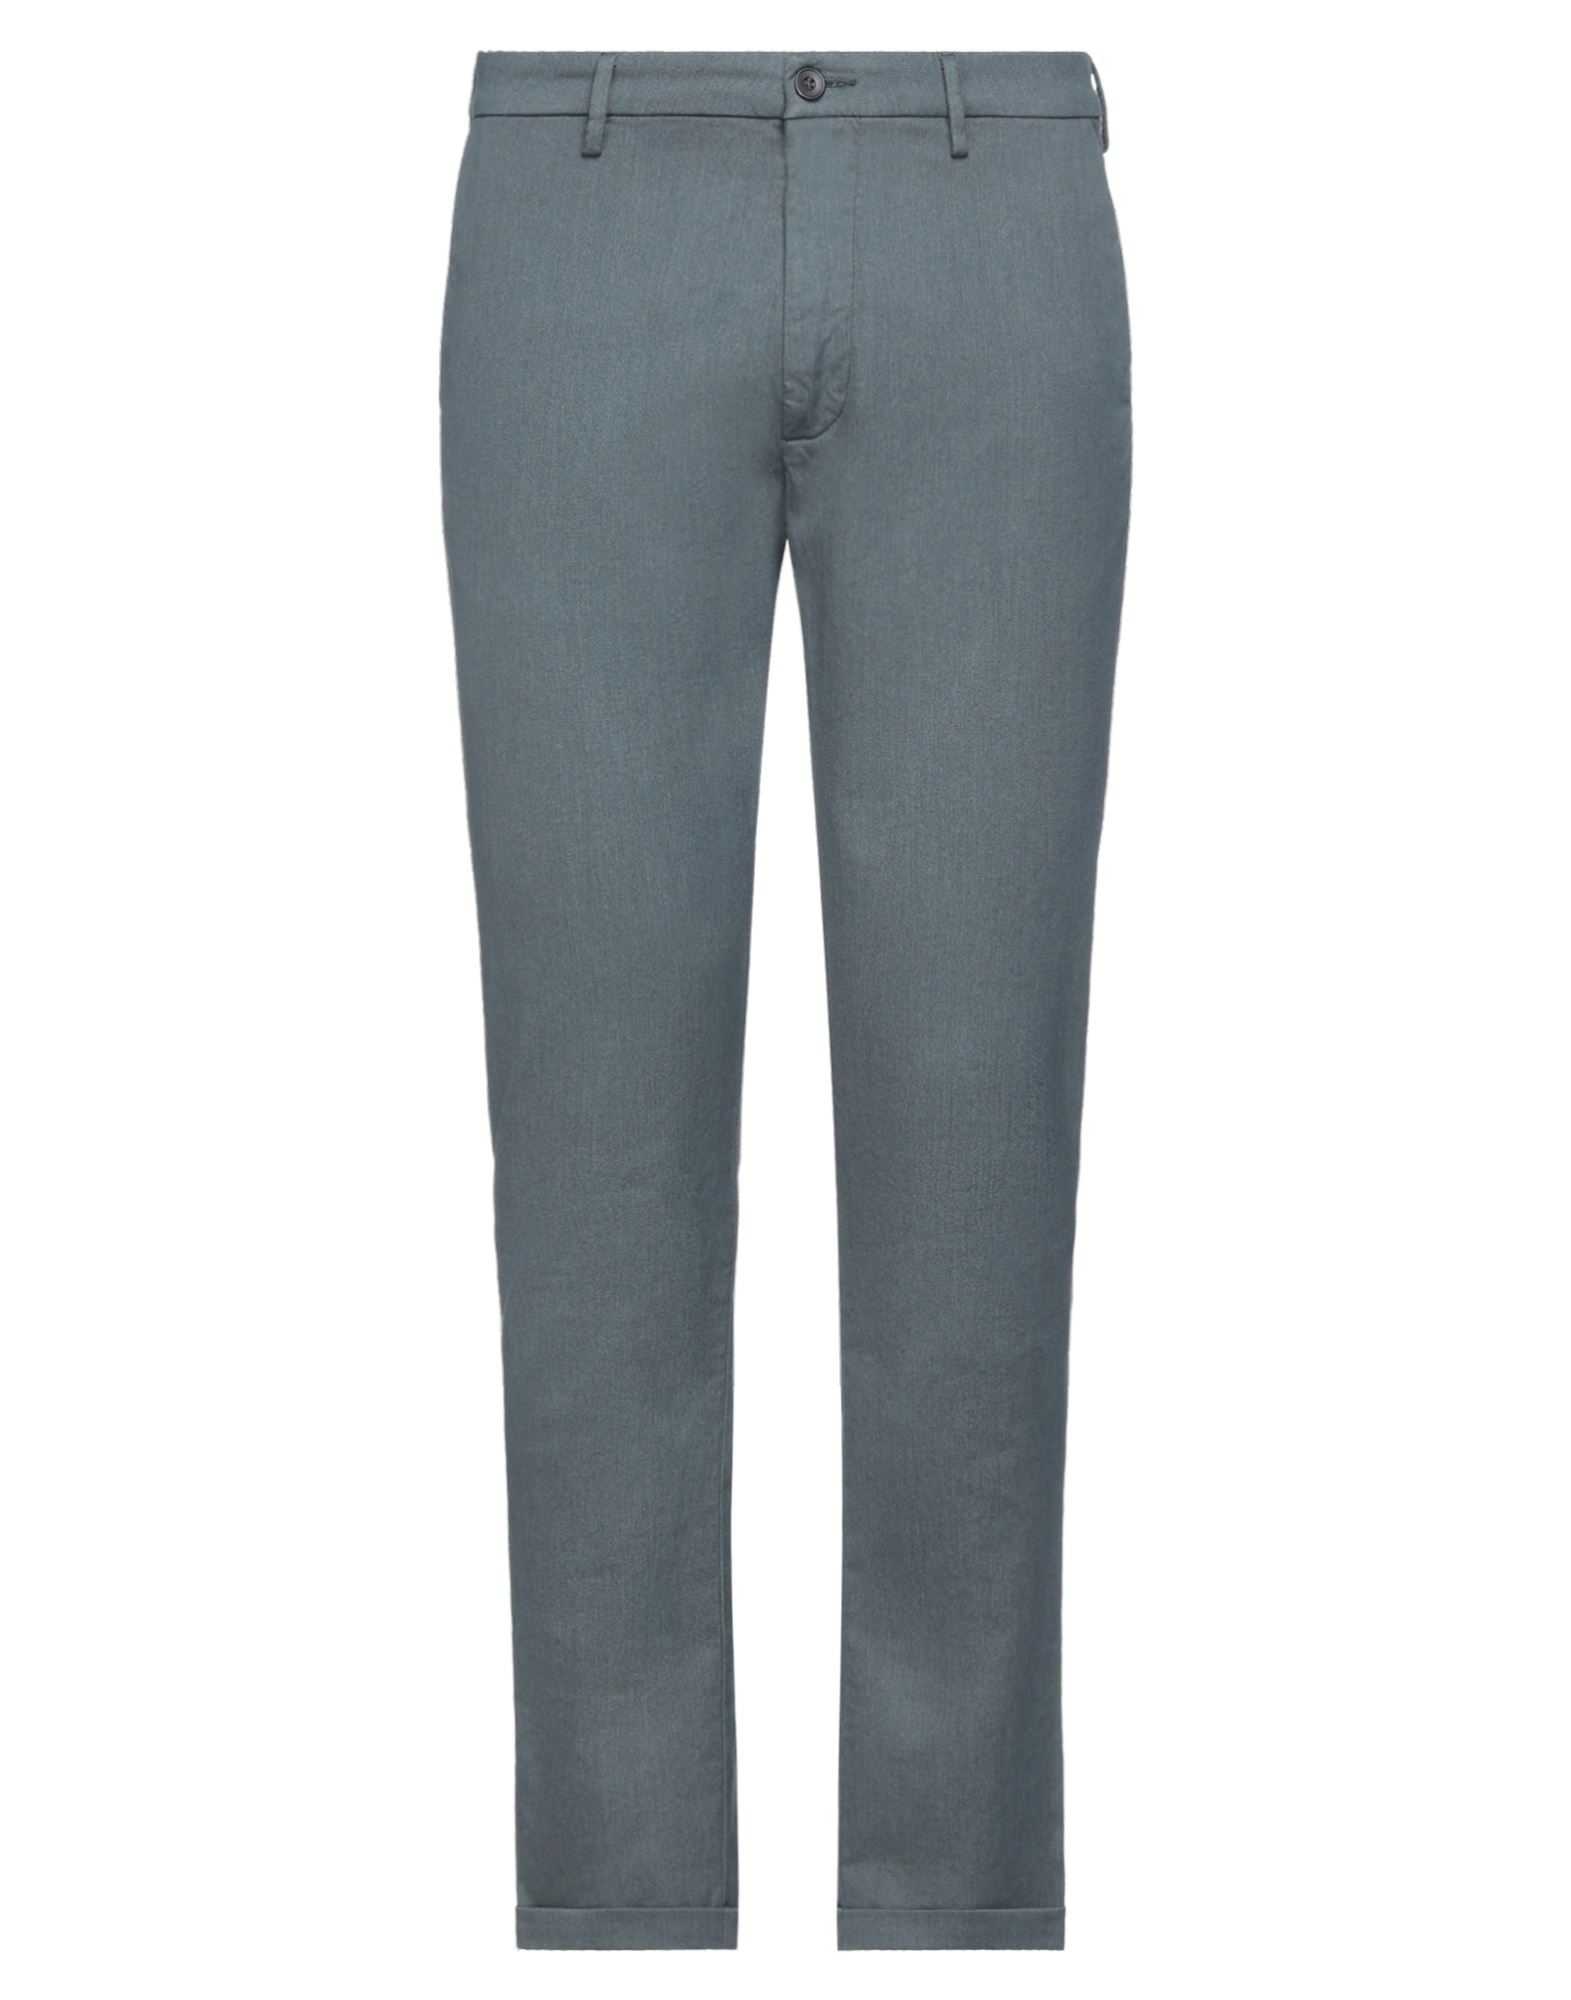 Pence Pants In Grey